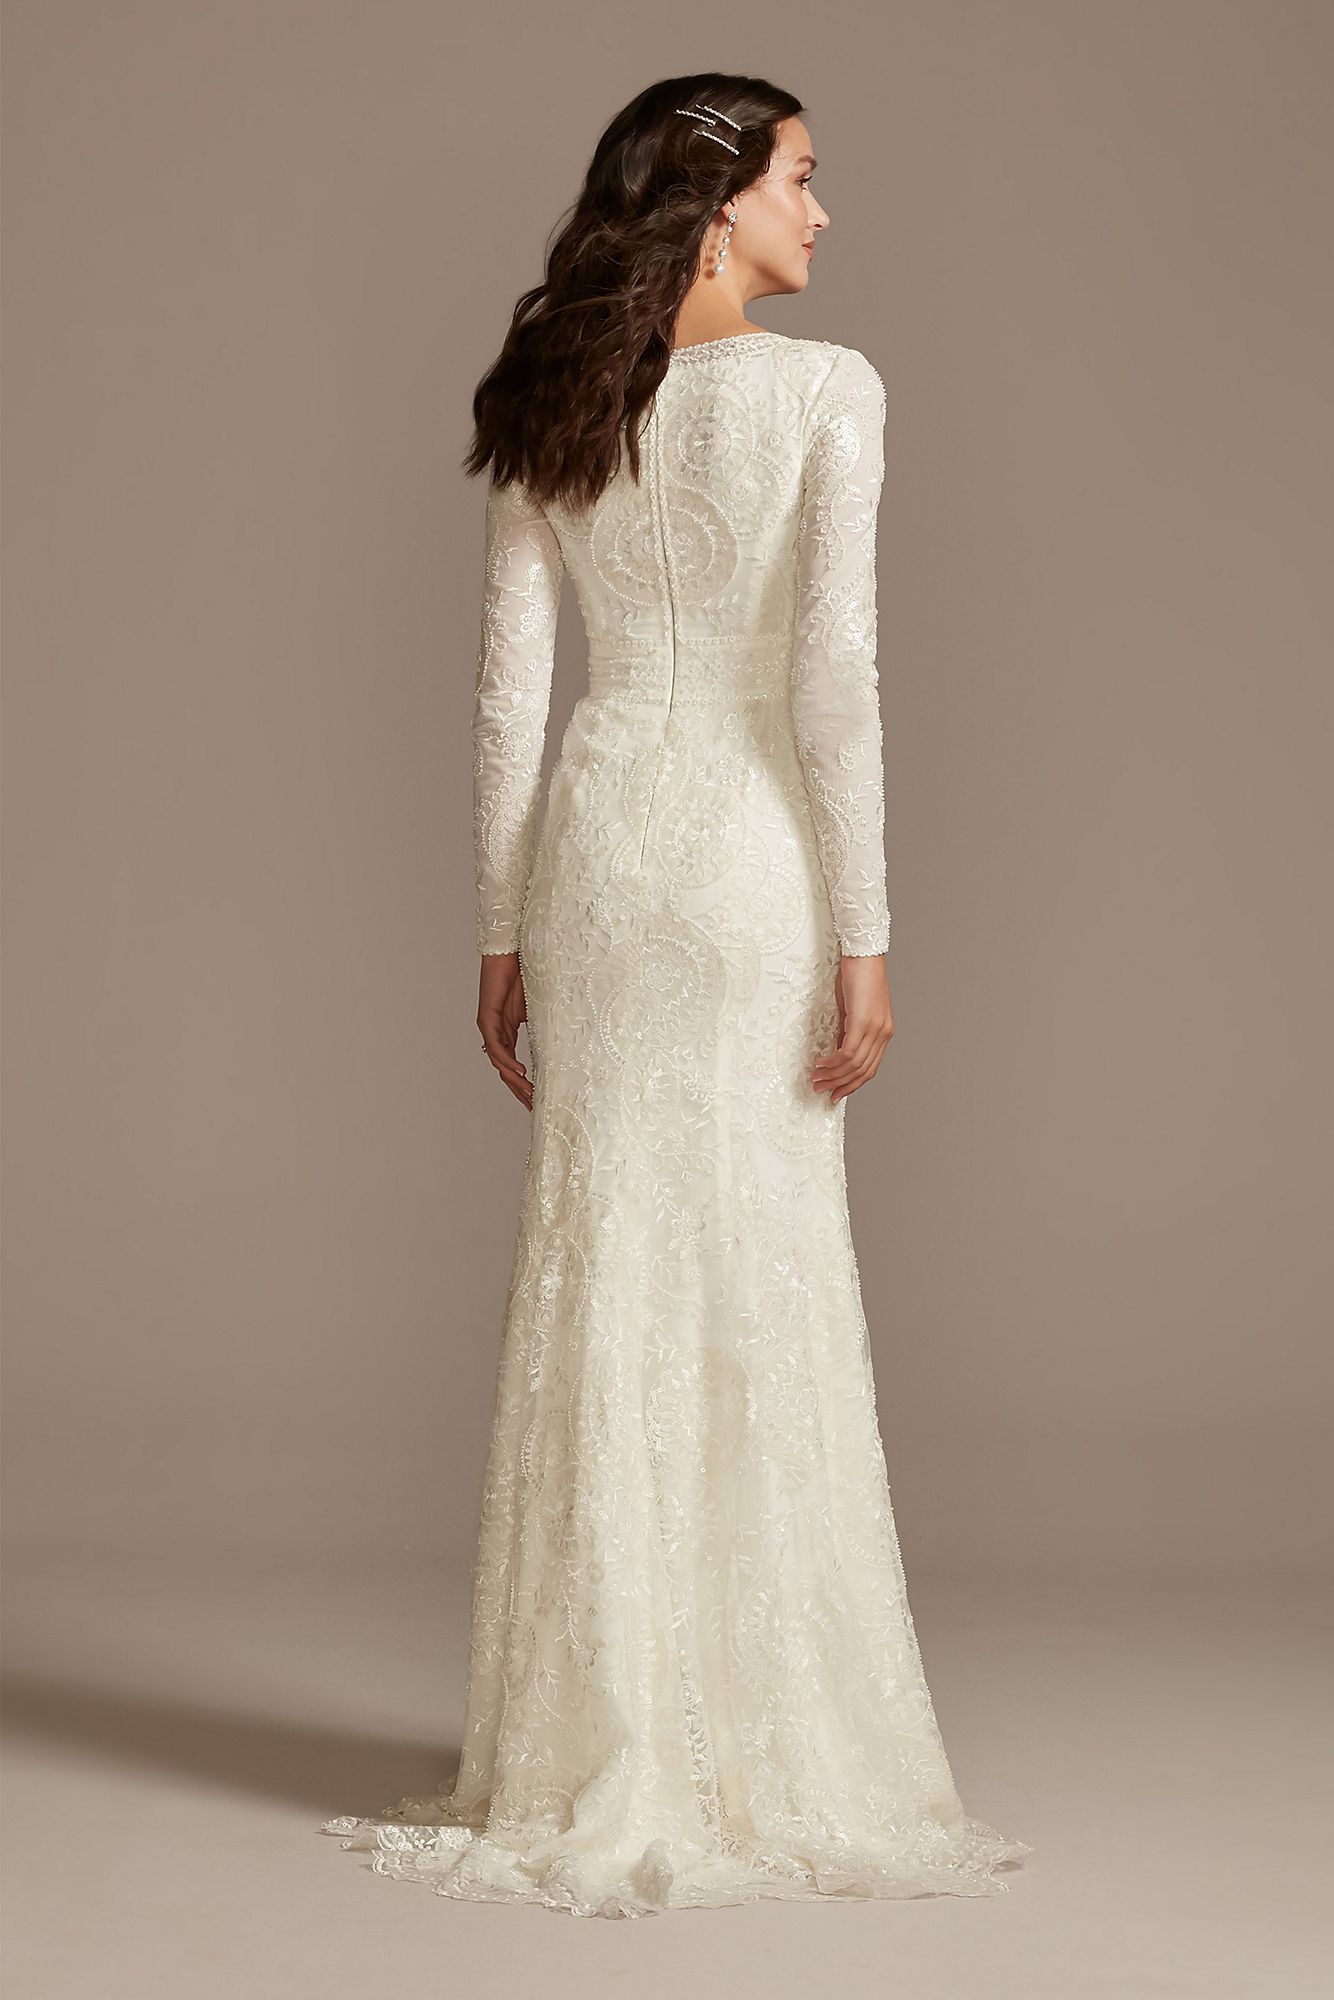 Sequin Embellished Wedding Dress with Scallop Hem MS251236